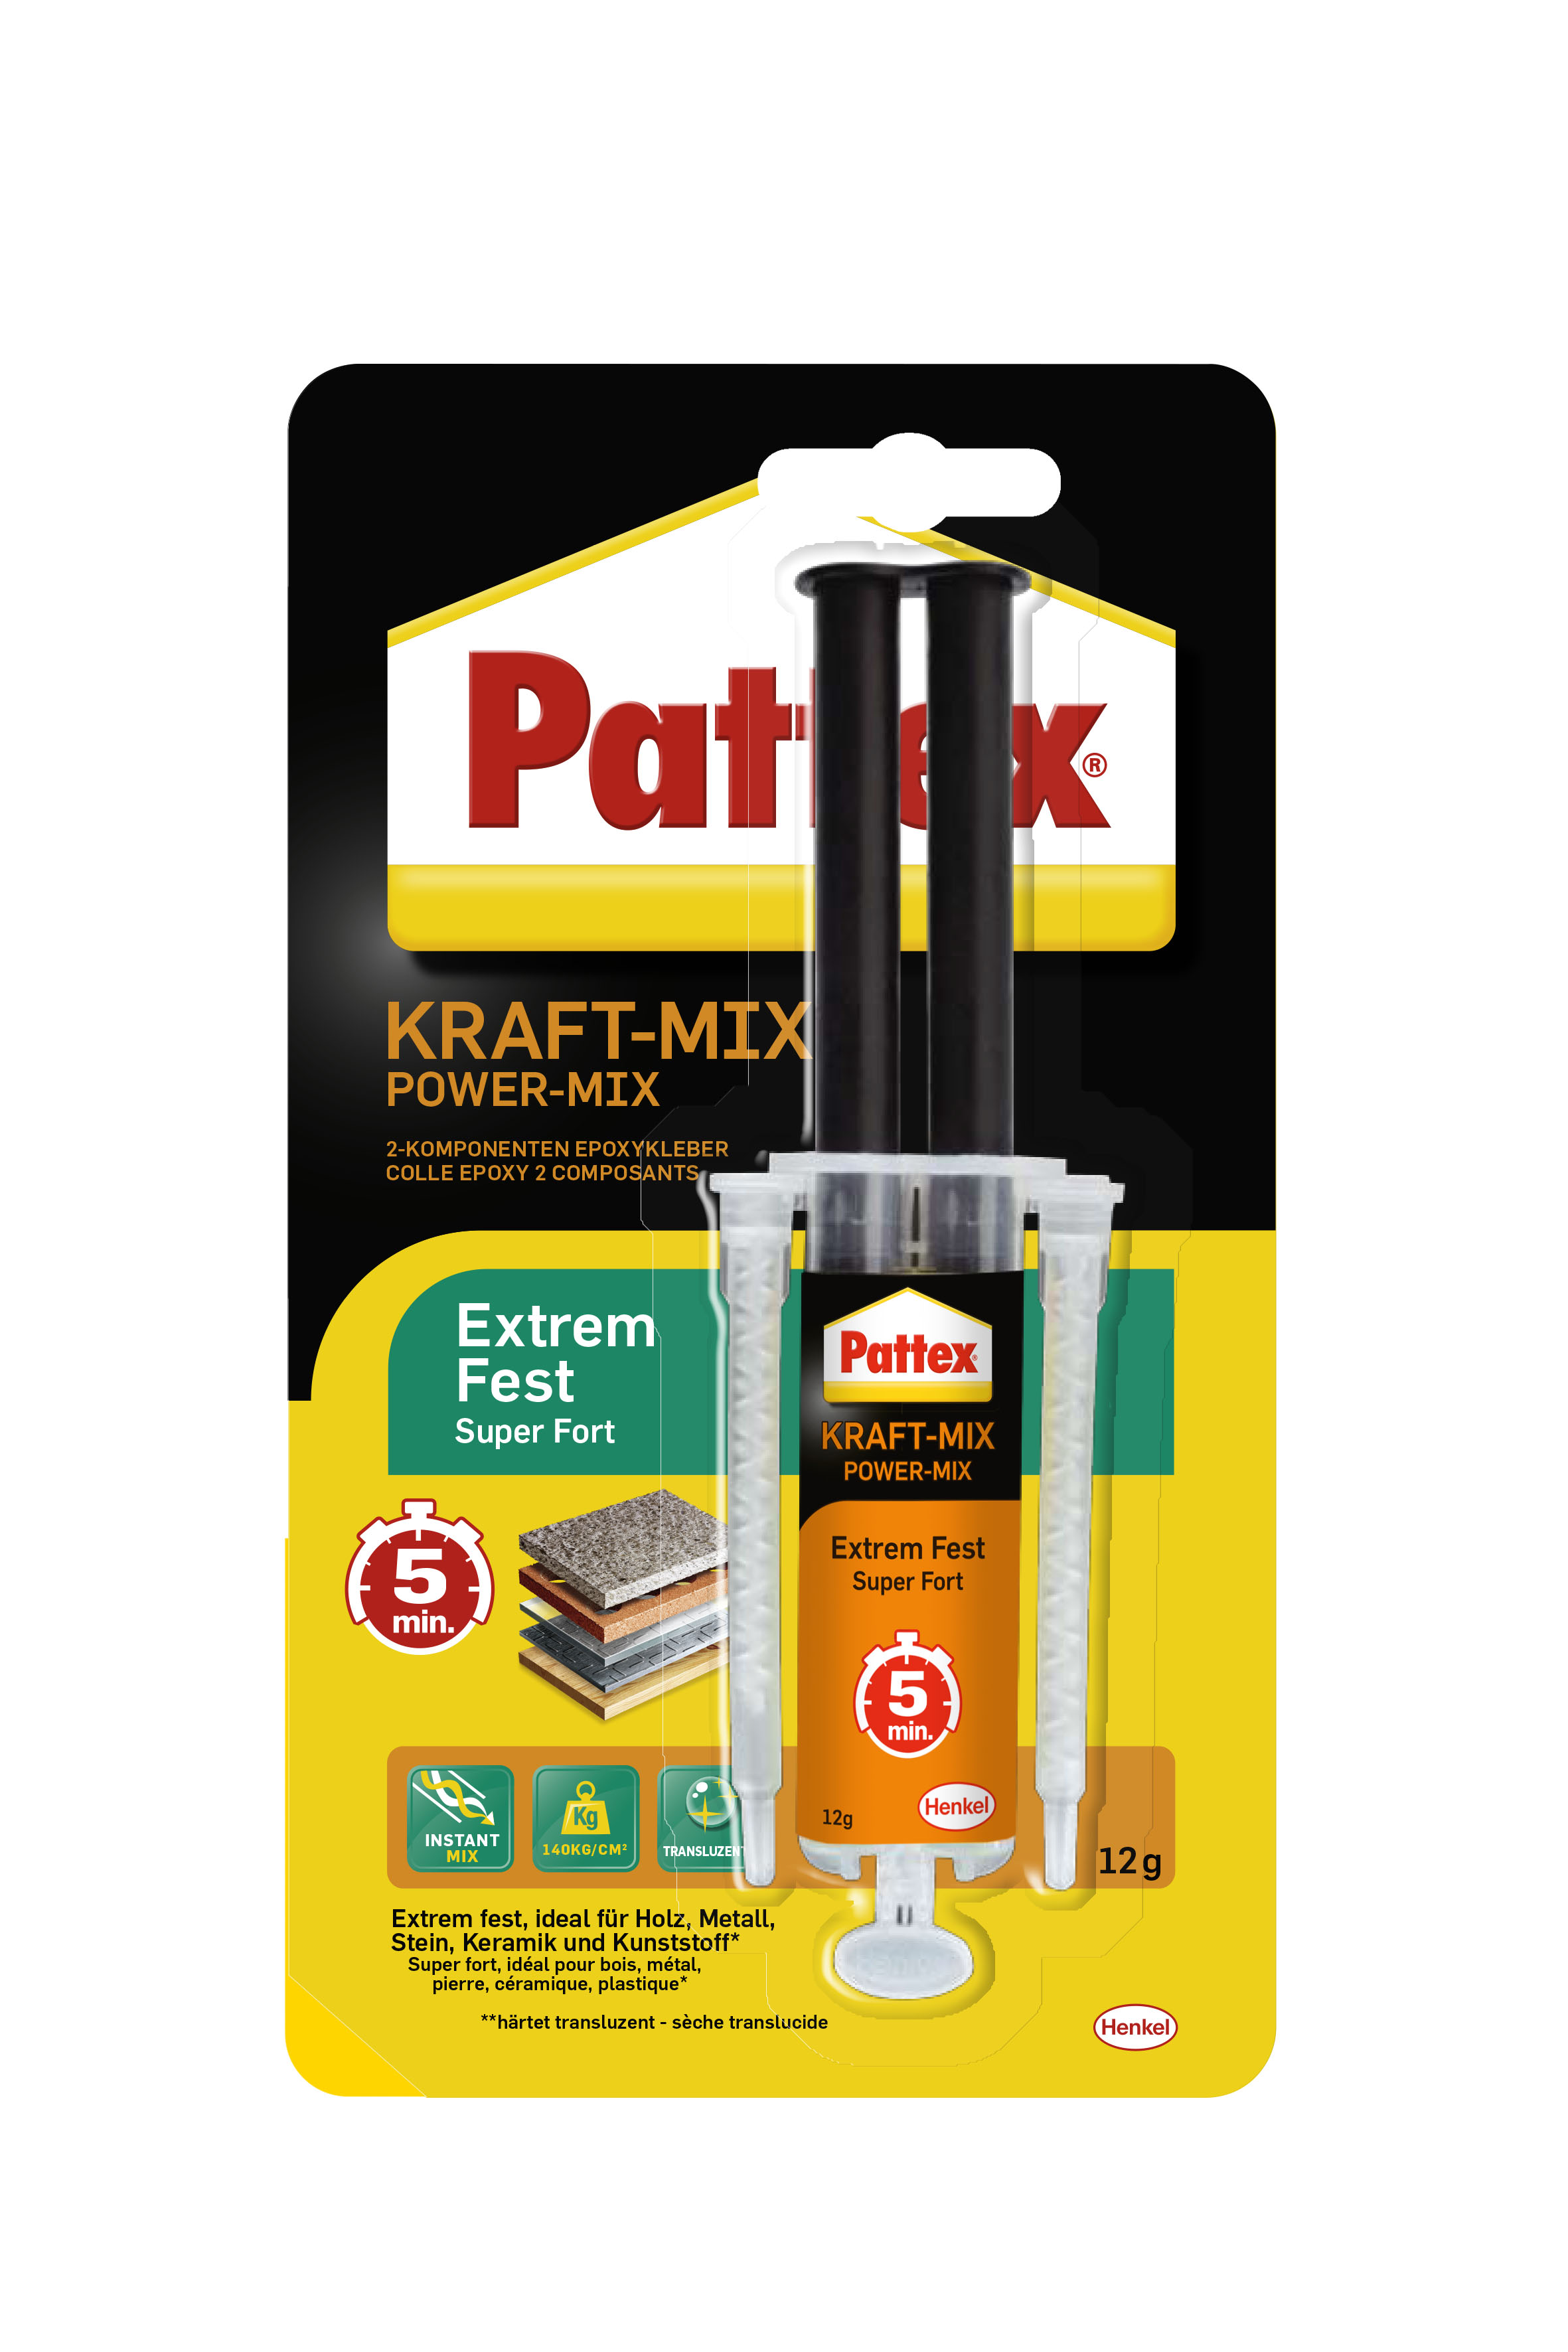 Pattex Kraft Mix Extrem Fest Spritze, 11 ml